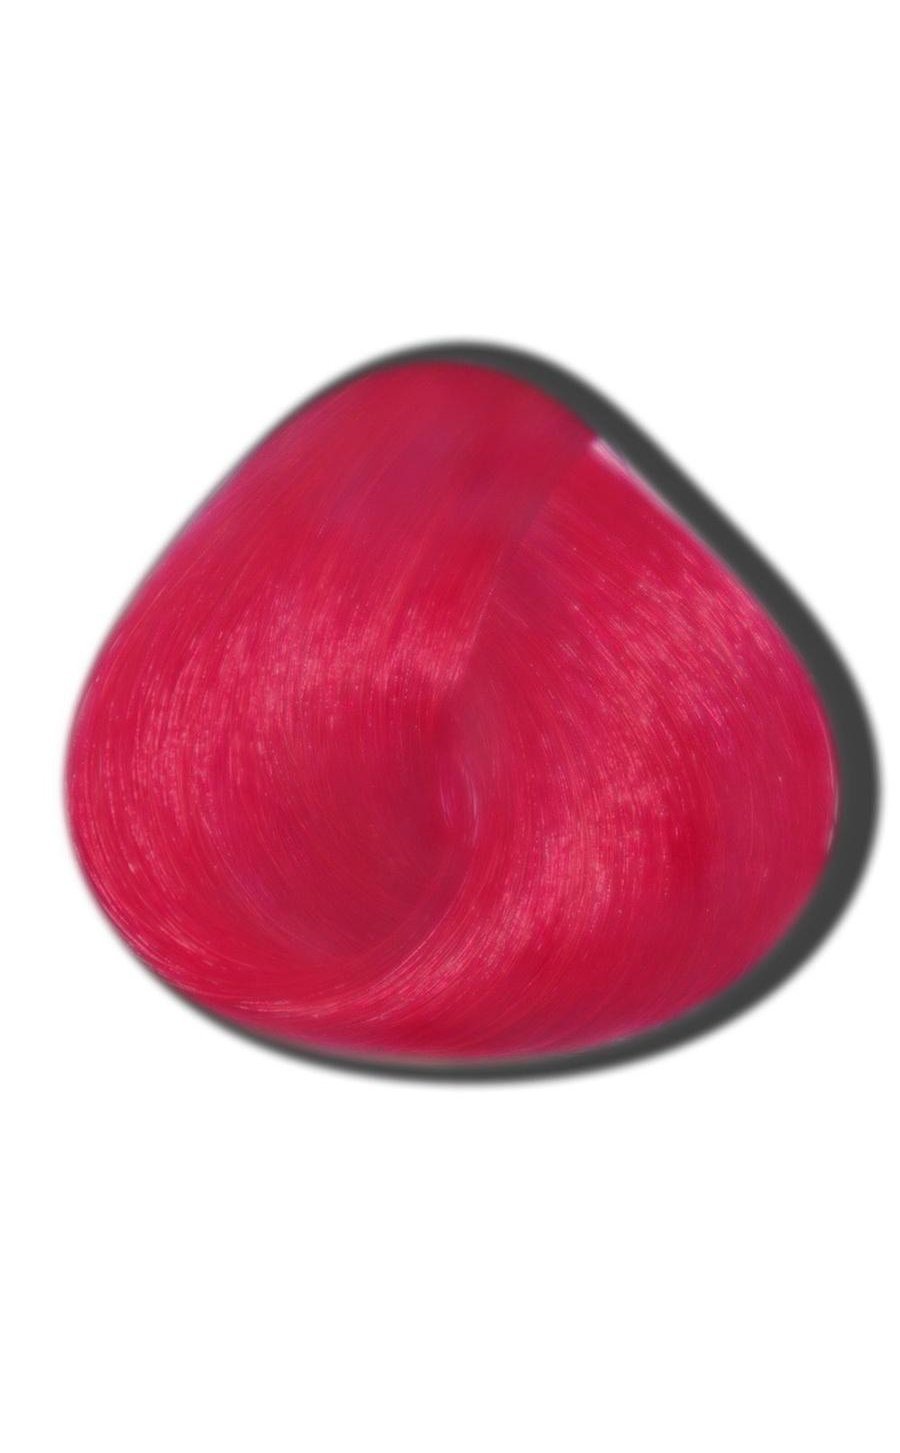 Flamingo Pink Hair Dye-Directions-Tragic Beautiful